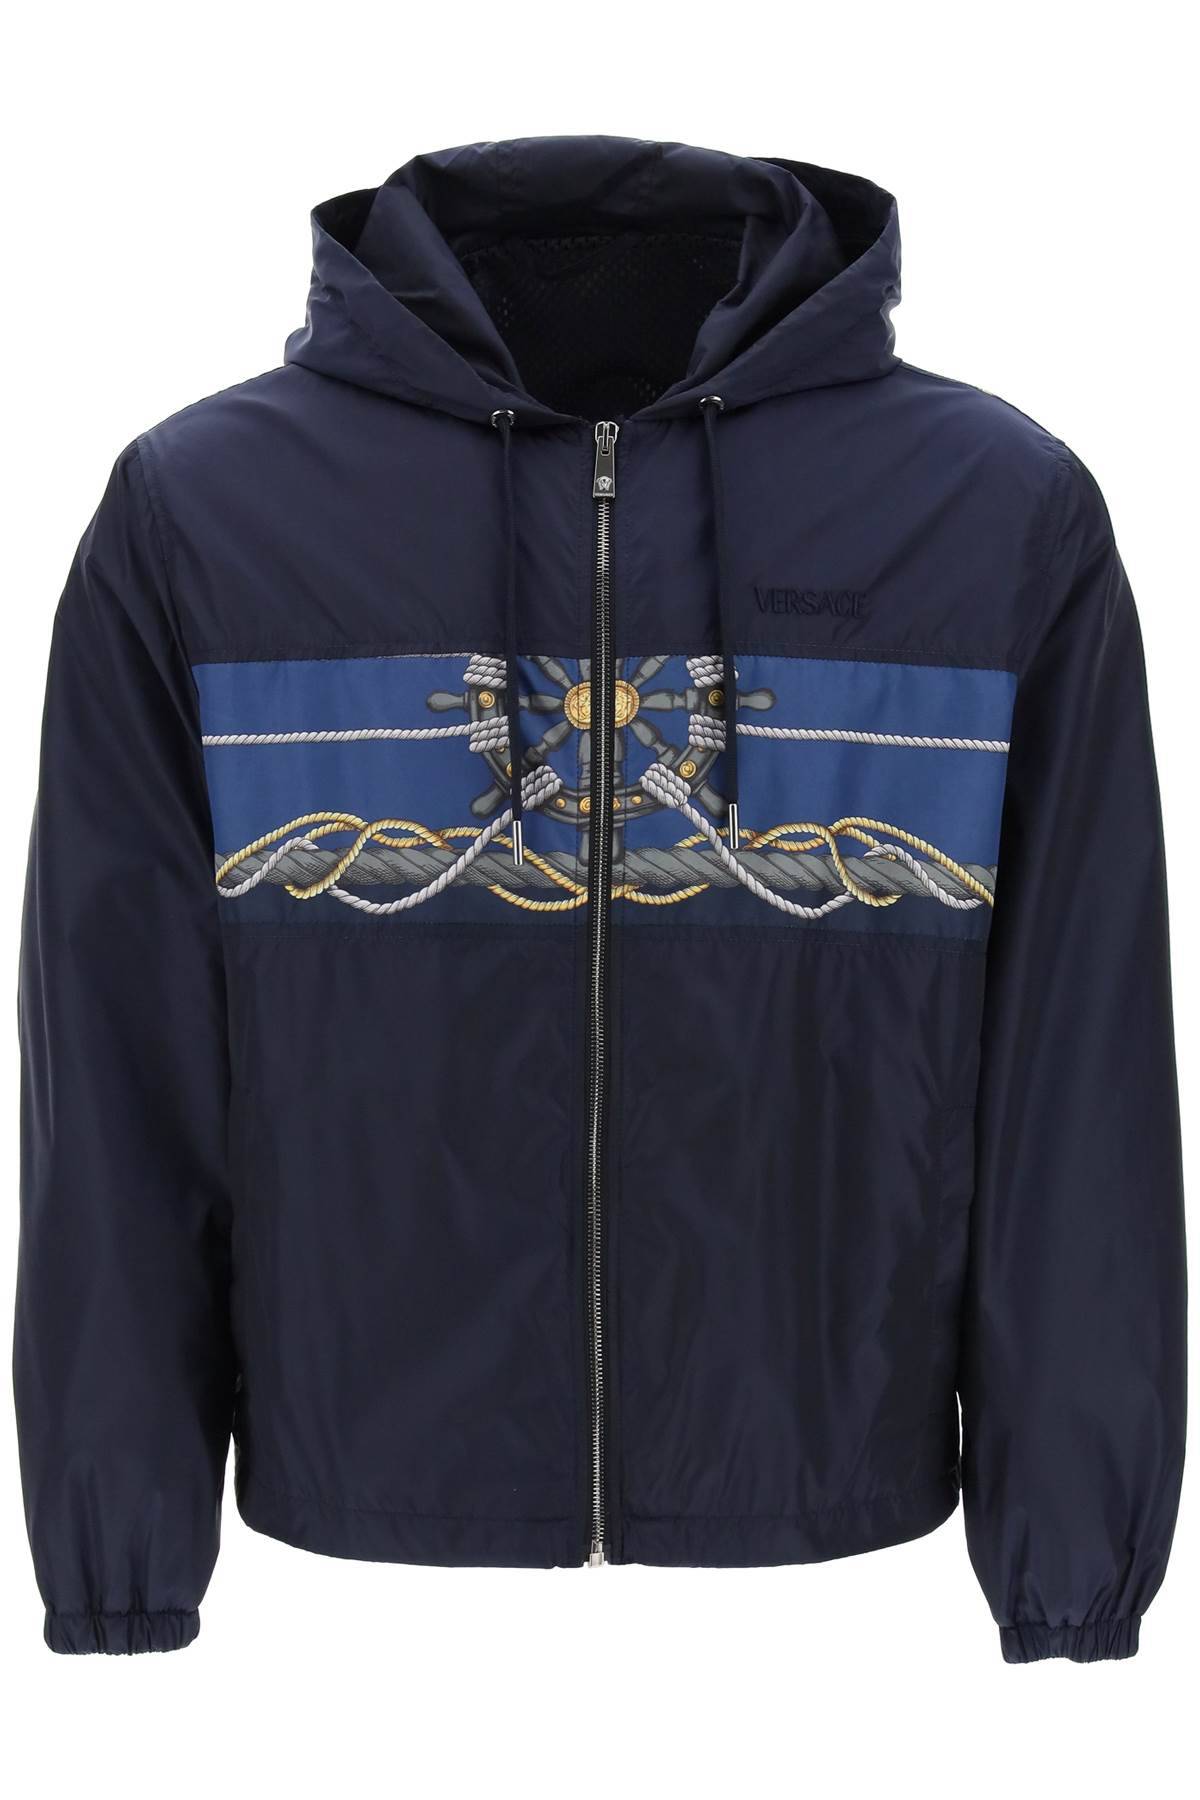 Versace VERSACE versace nautical hooded jacket